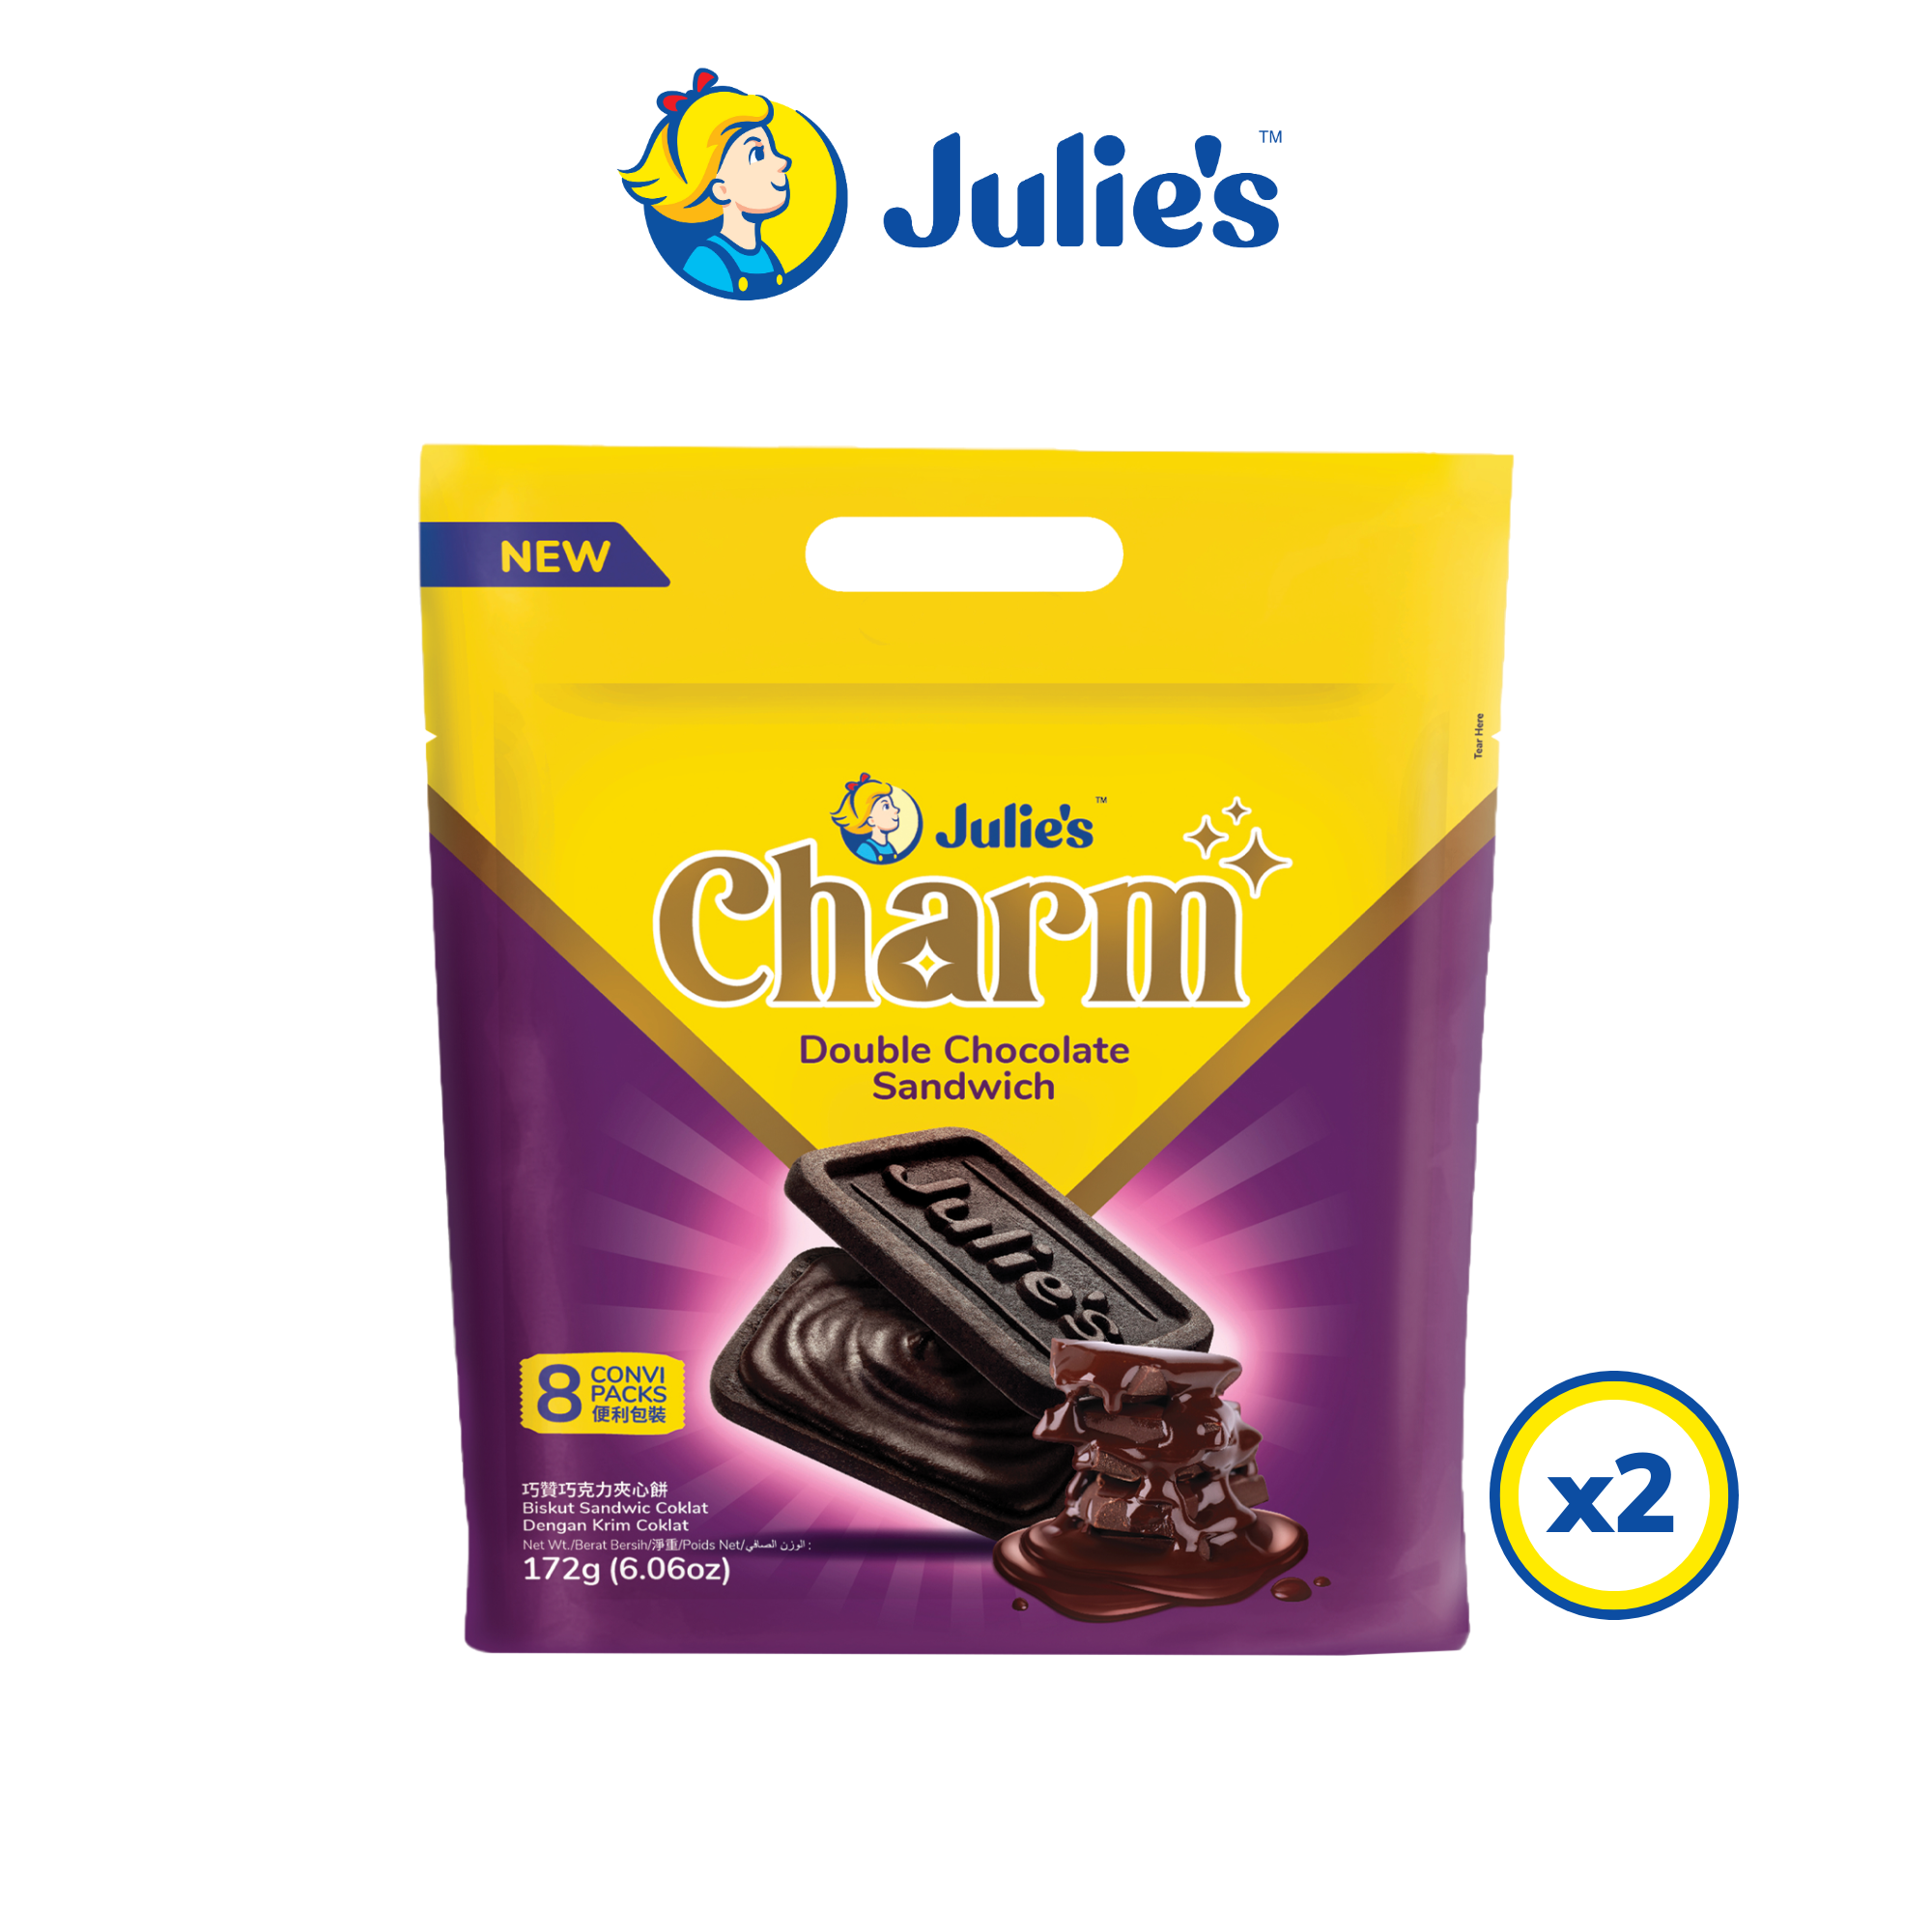 Julie's Charm Double Chocolate Sandwich 172g x 2 packs